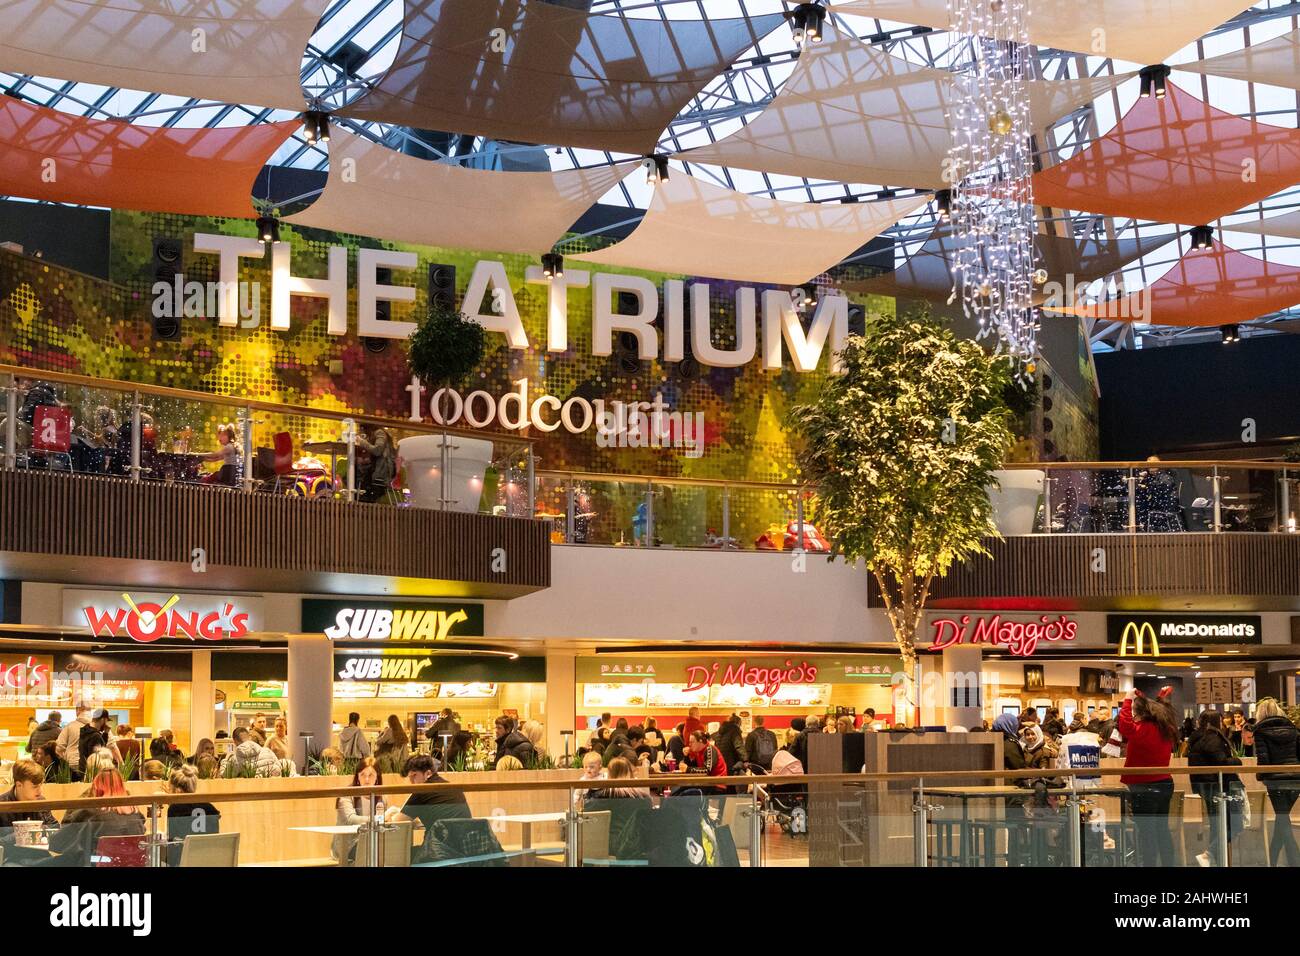 St Enoch shopping centre - The Atrium Foodcourt - Glasgow, Scotland, UK Stock Photo